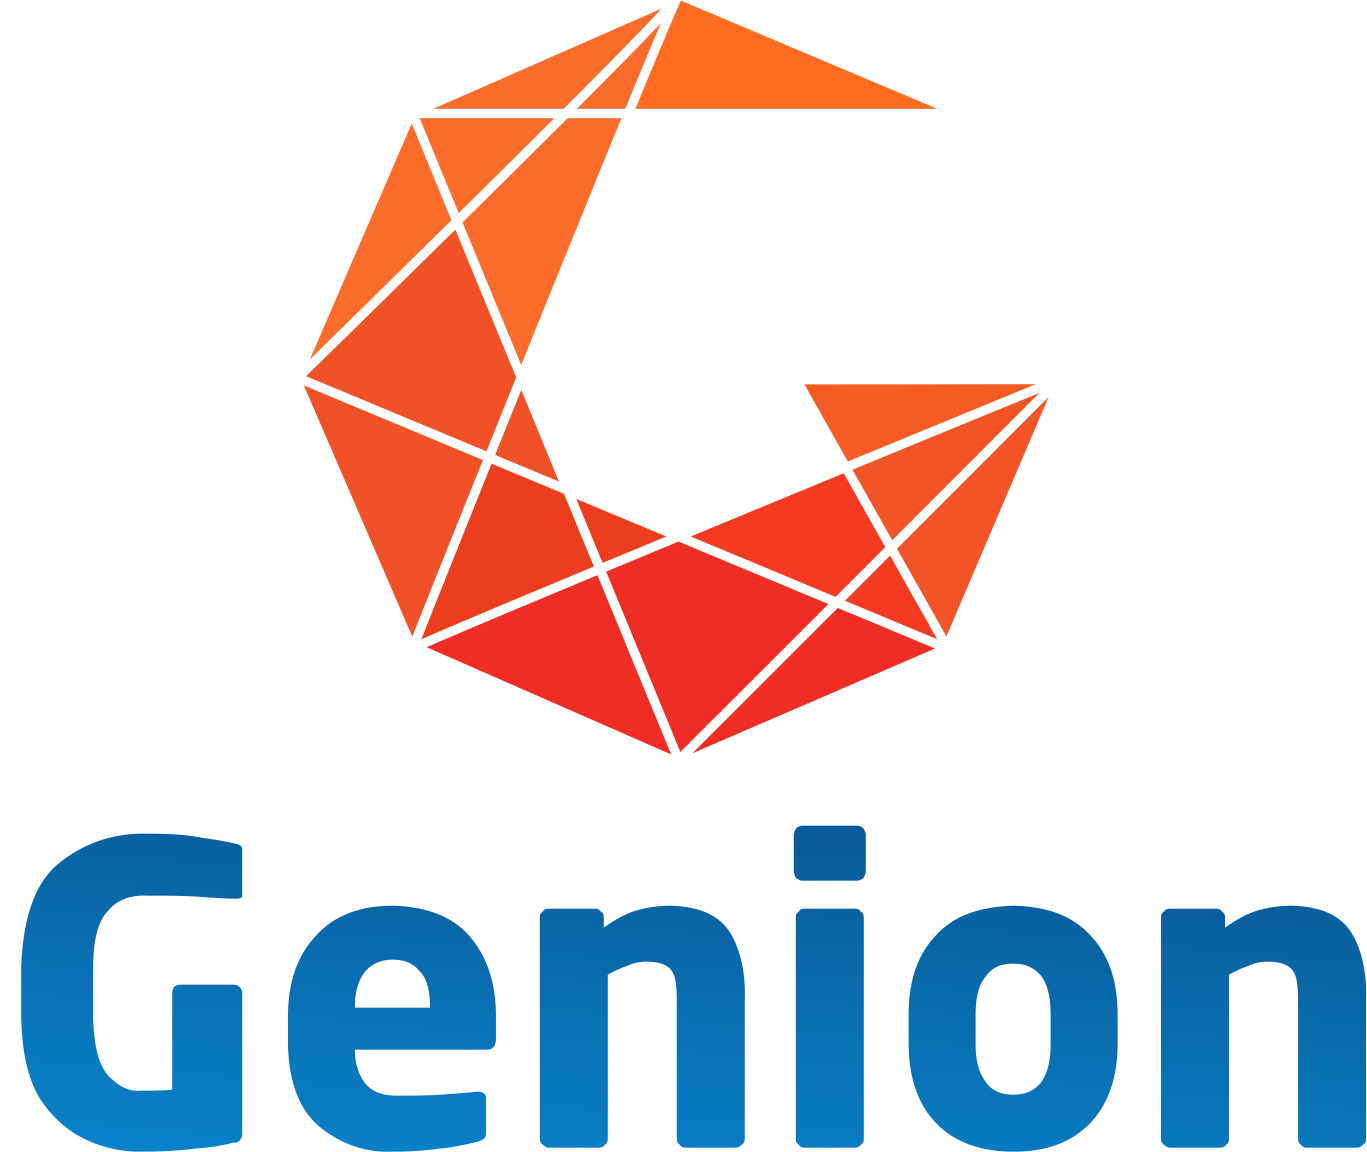 Logo genion.png